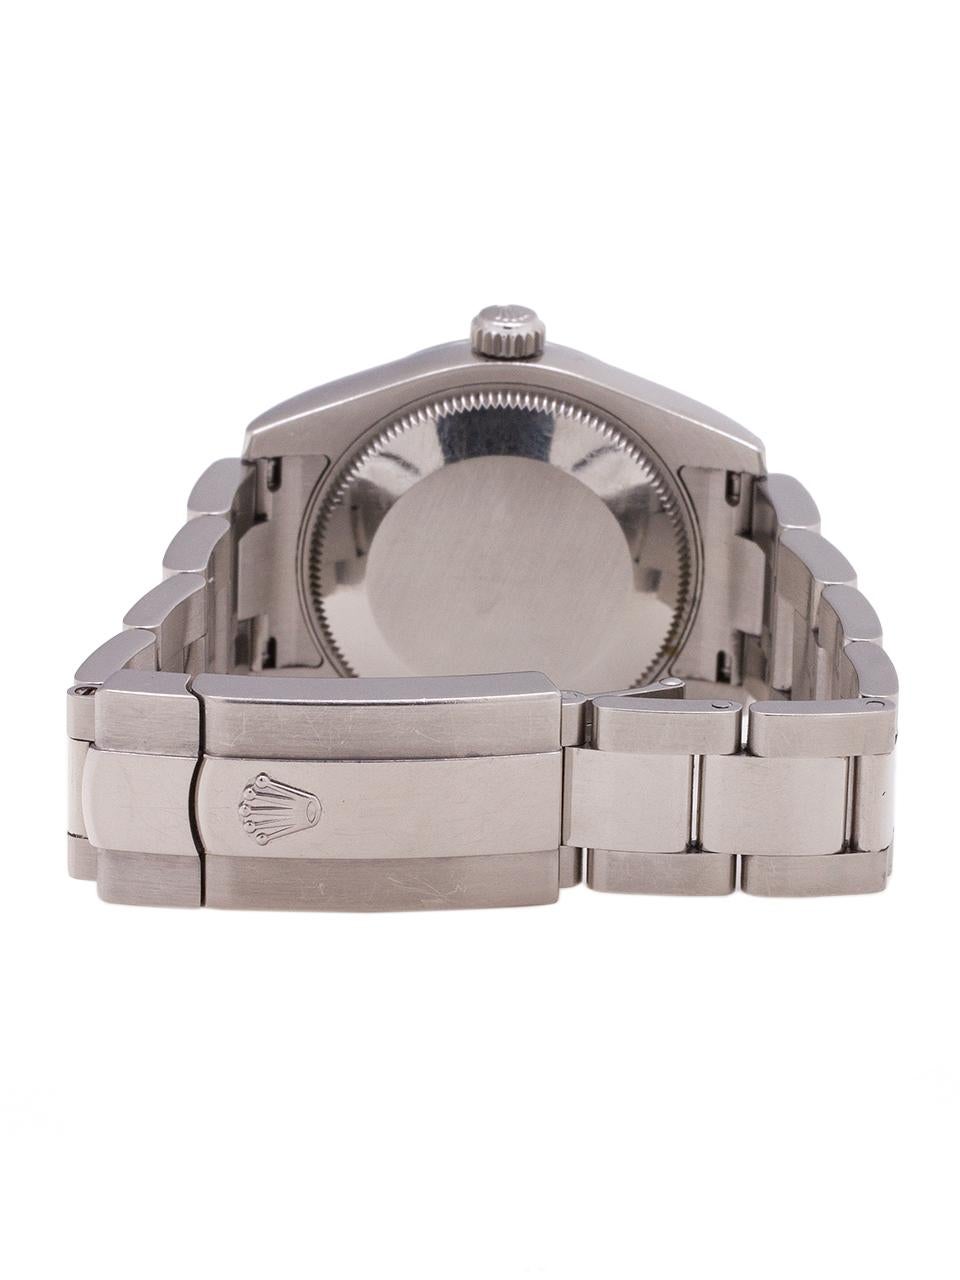 Women's Rolex Stainless Steel Lady Rolex Datejust self winding Wristwatch 178240, c 2015 For Sale